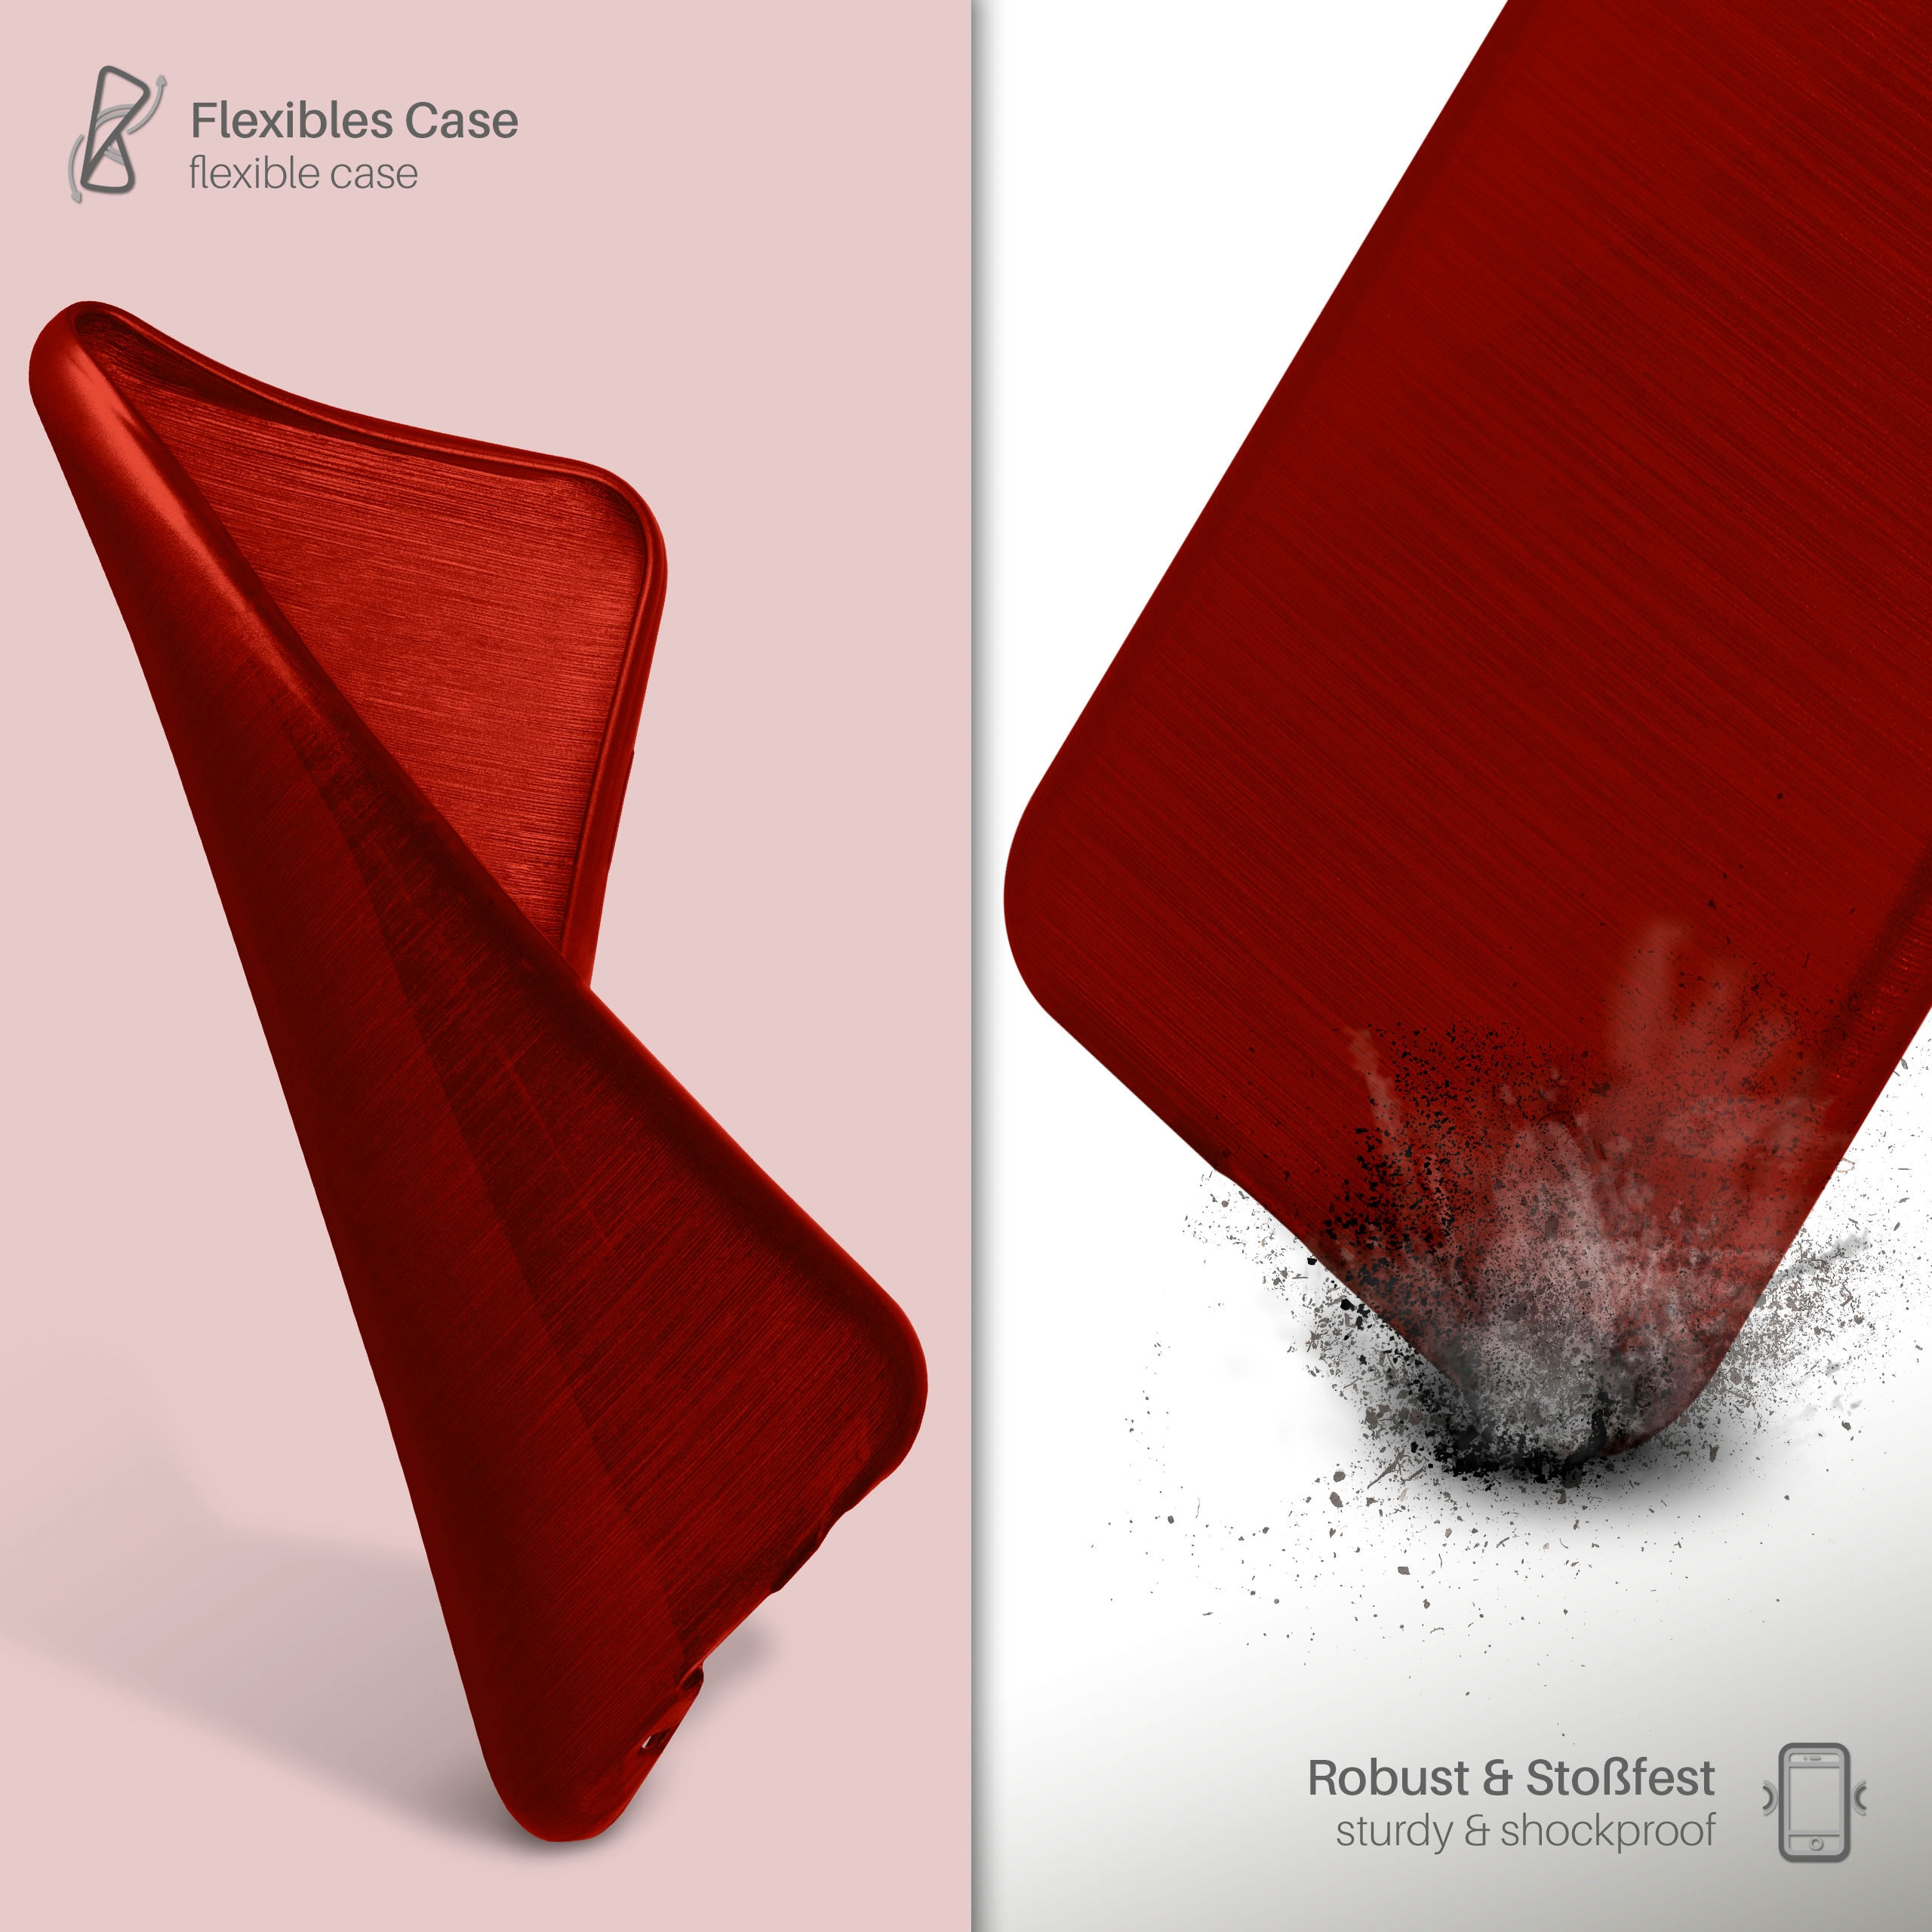 MOEX Brushed / 5 iPhone Case, (2016), 5s / Apple, SE Crimson-Red Backcover